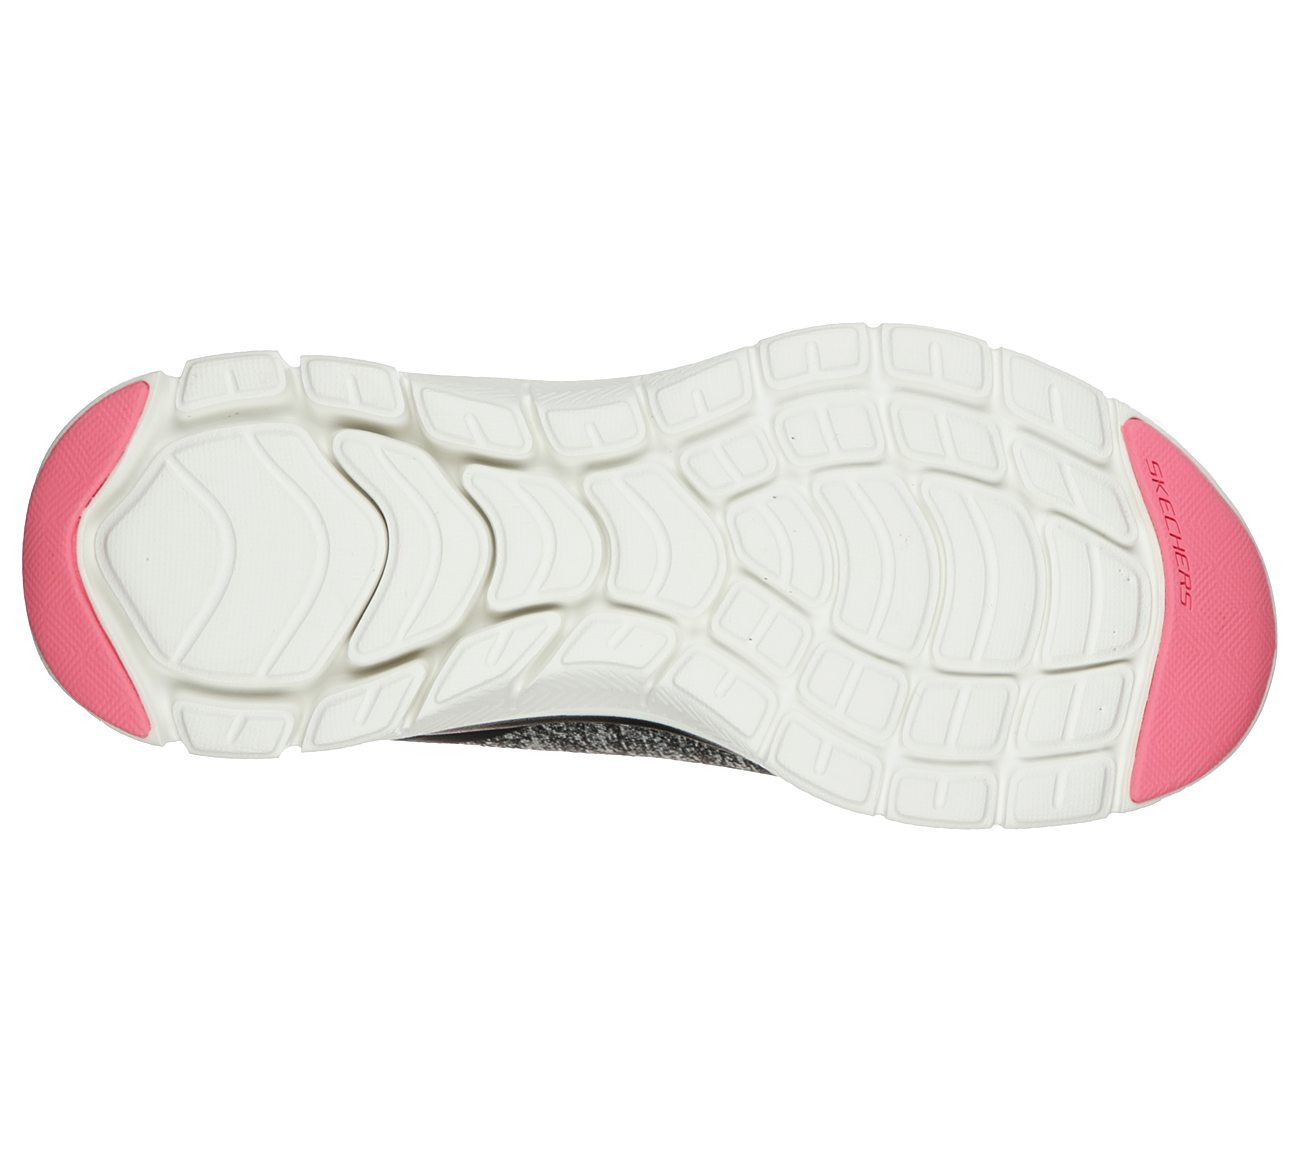 Skechers 149307 Flex Appeal 4.0 Black Pink Ladies Lace Up Trainers